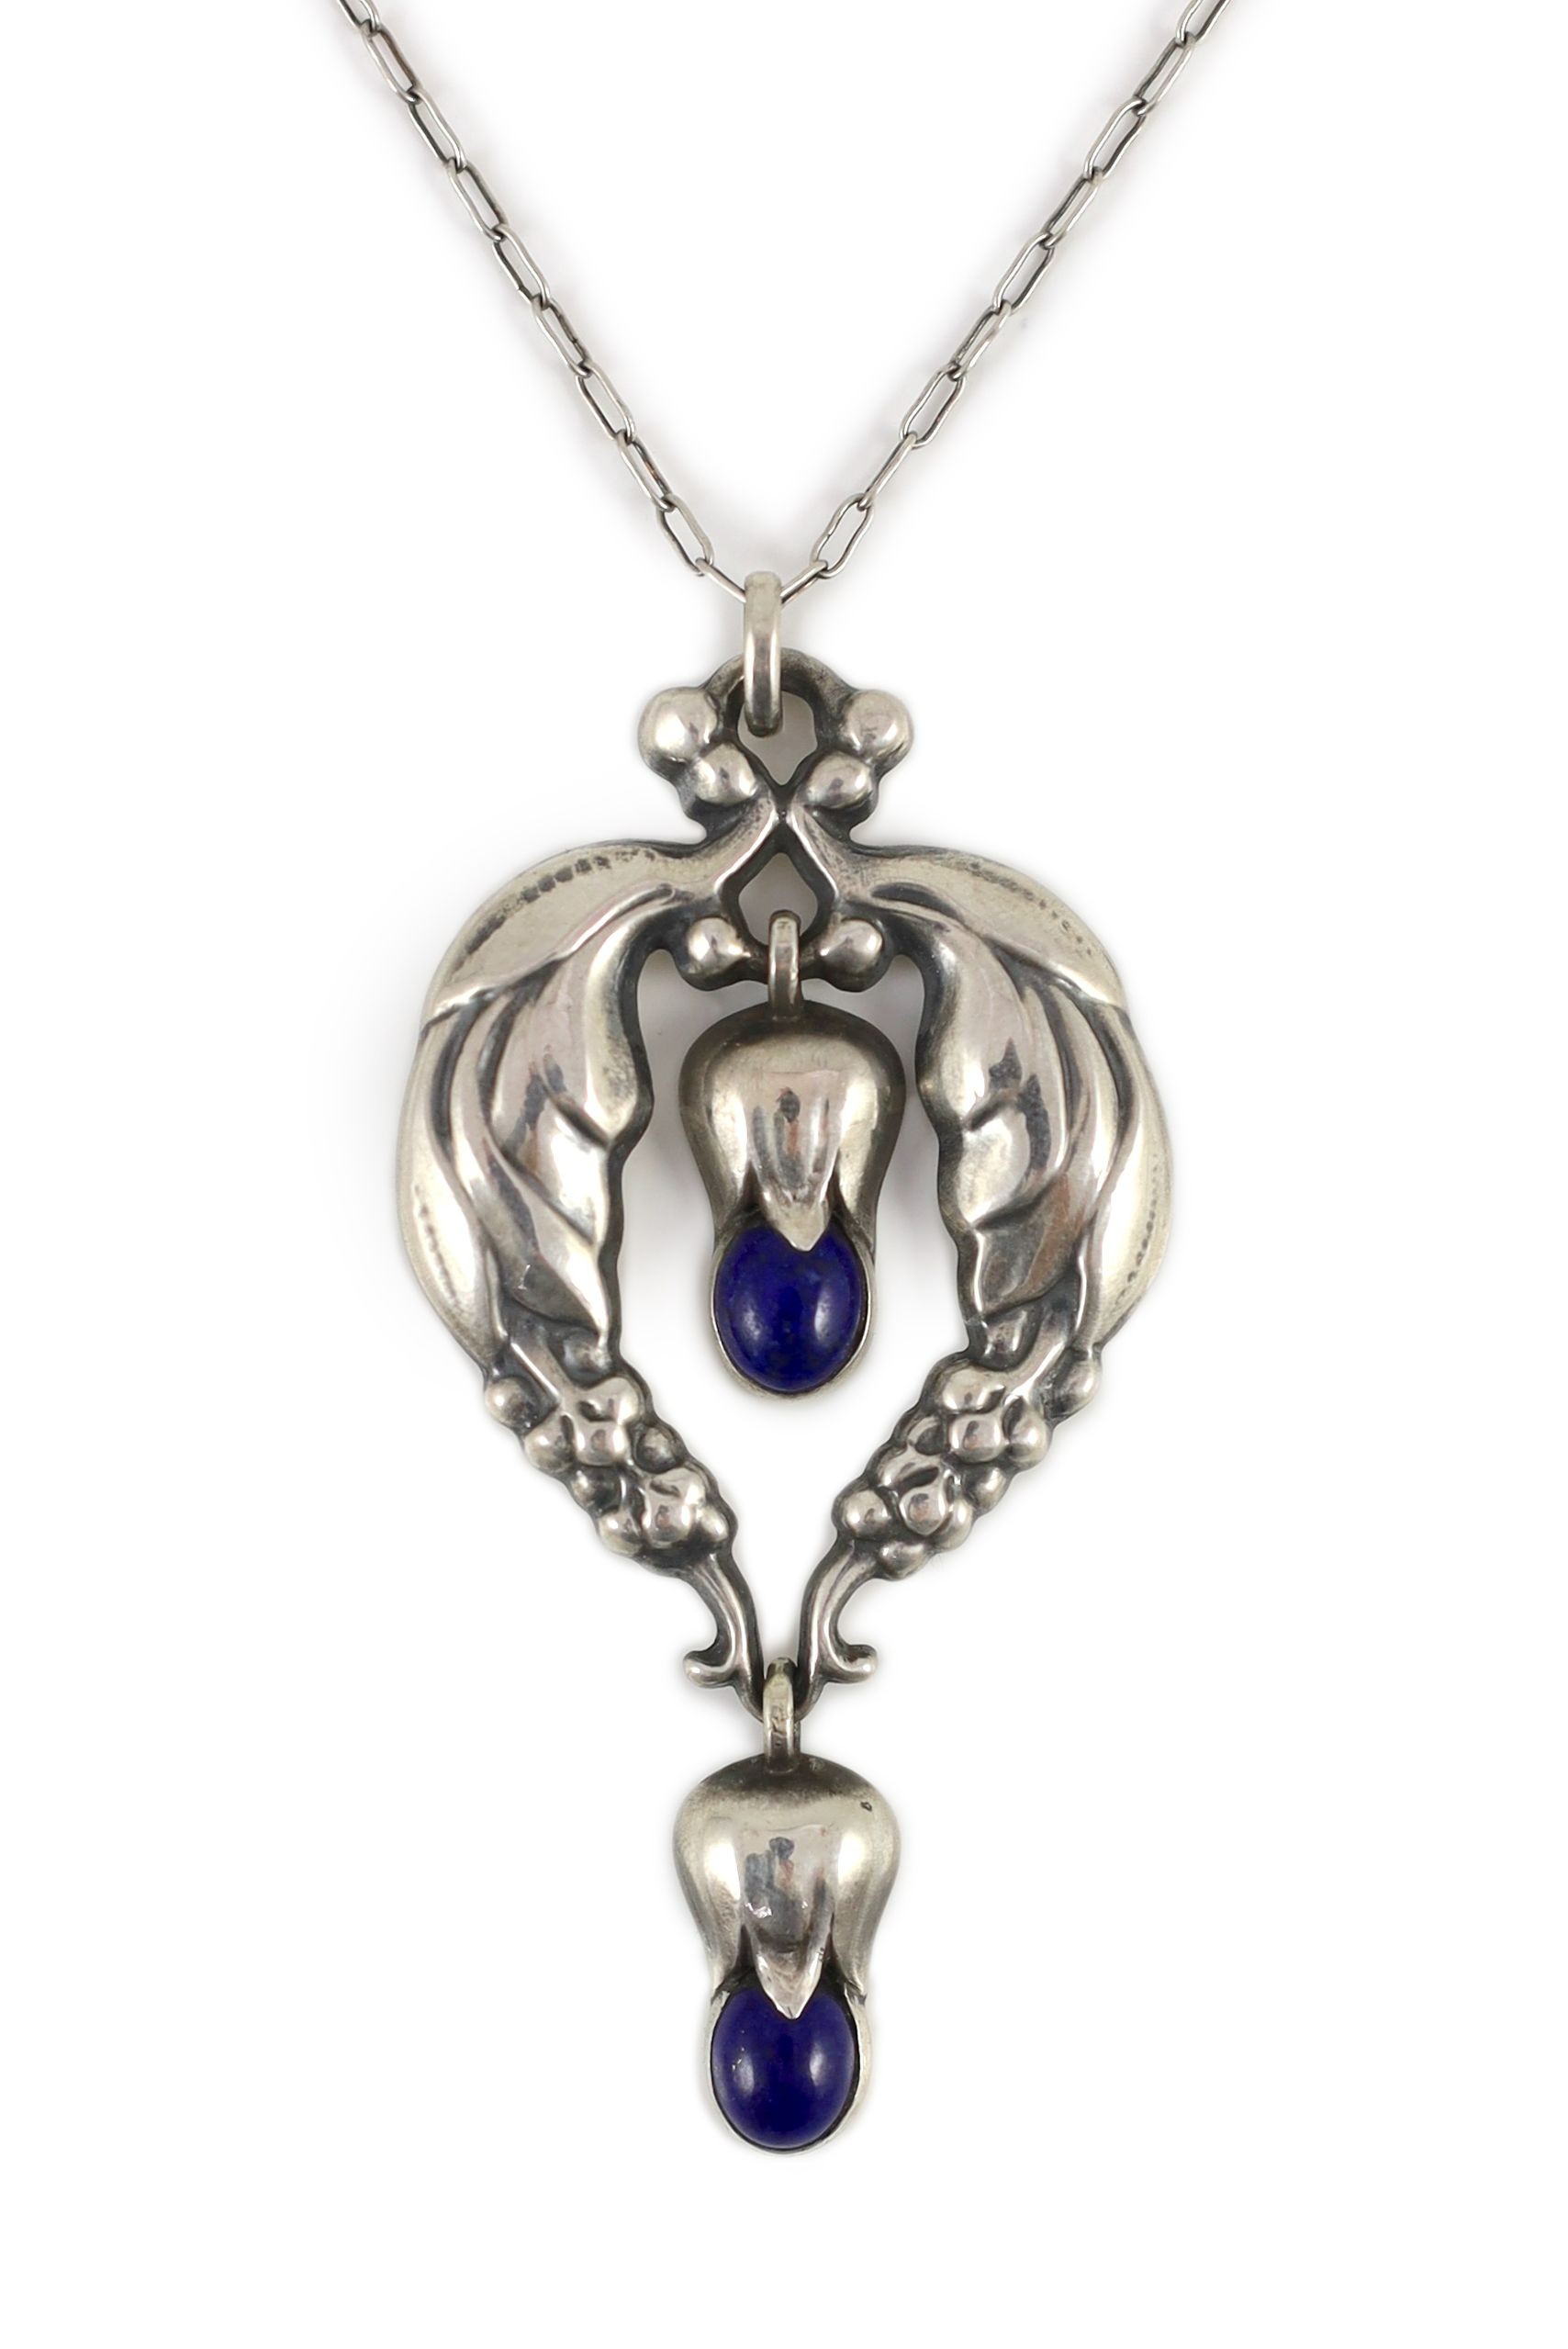 A 1920's George Jensen sterling silver and two stone lapis lazuli set drop pendant, design no. 51